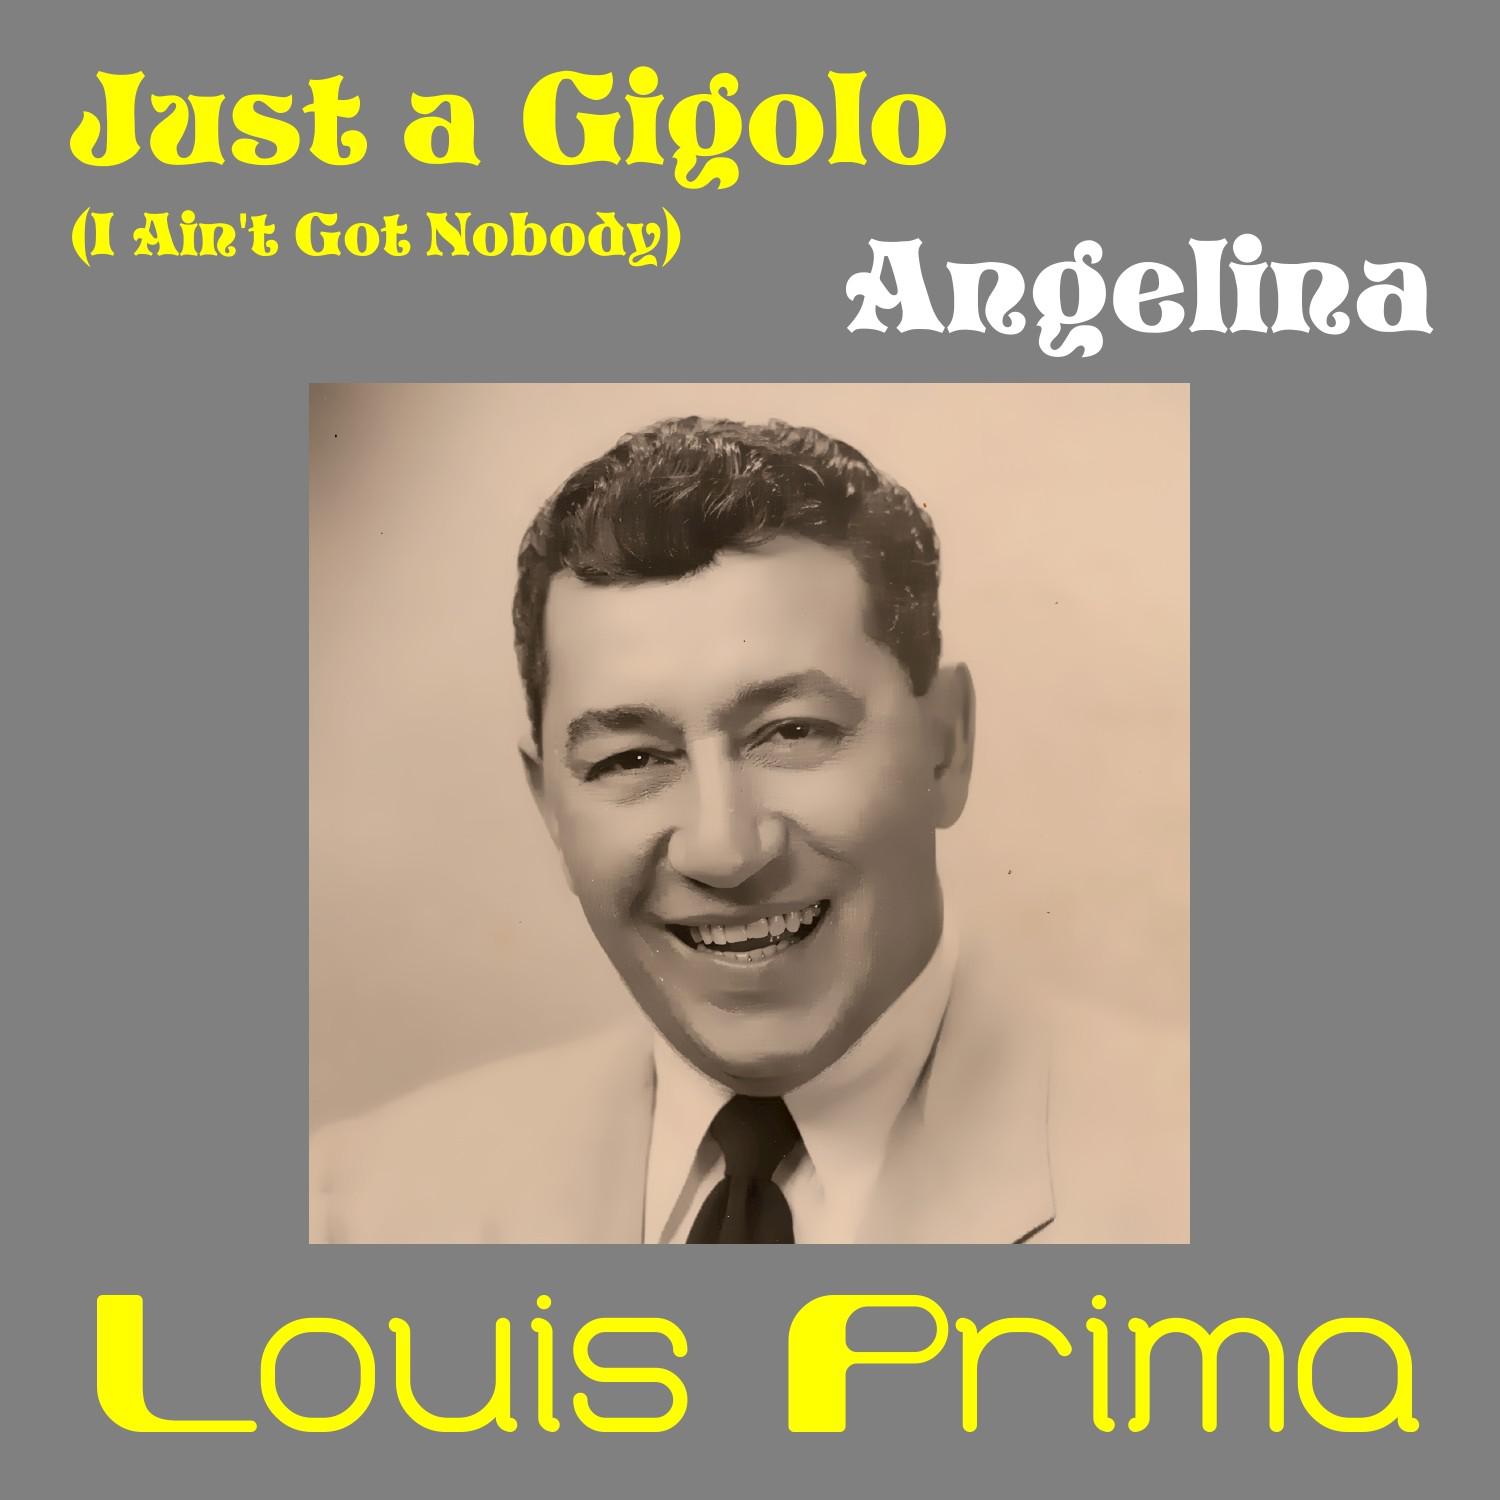 Just a Gigolo (I Ain't Got Nobody)